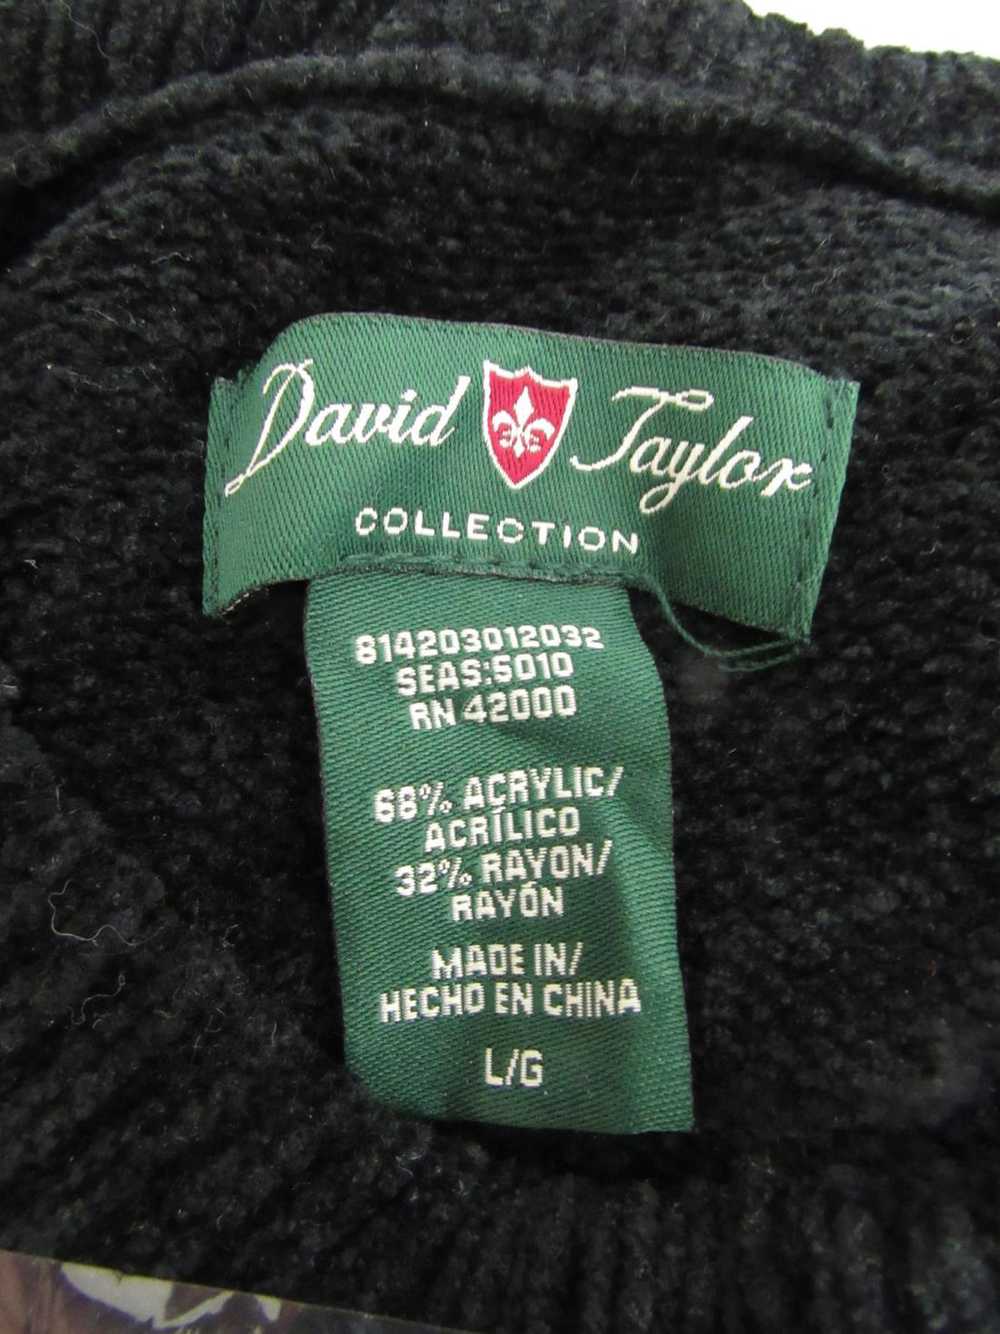 David Taylor Collection Crewneck Sweater - image 3